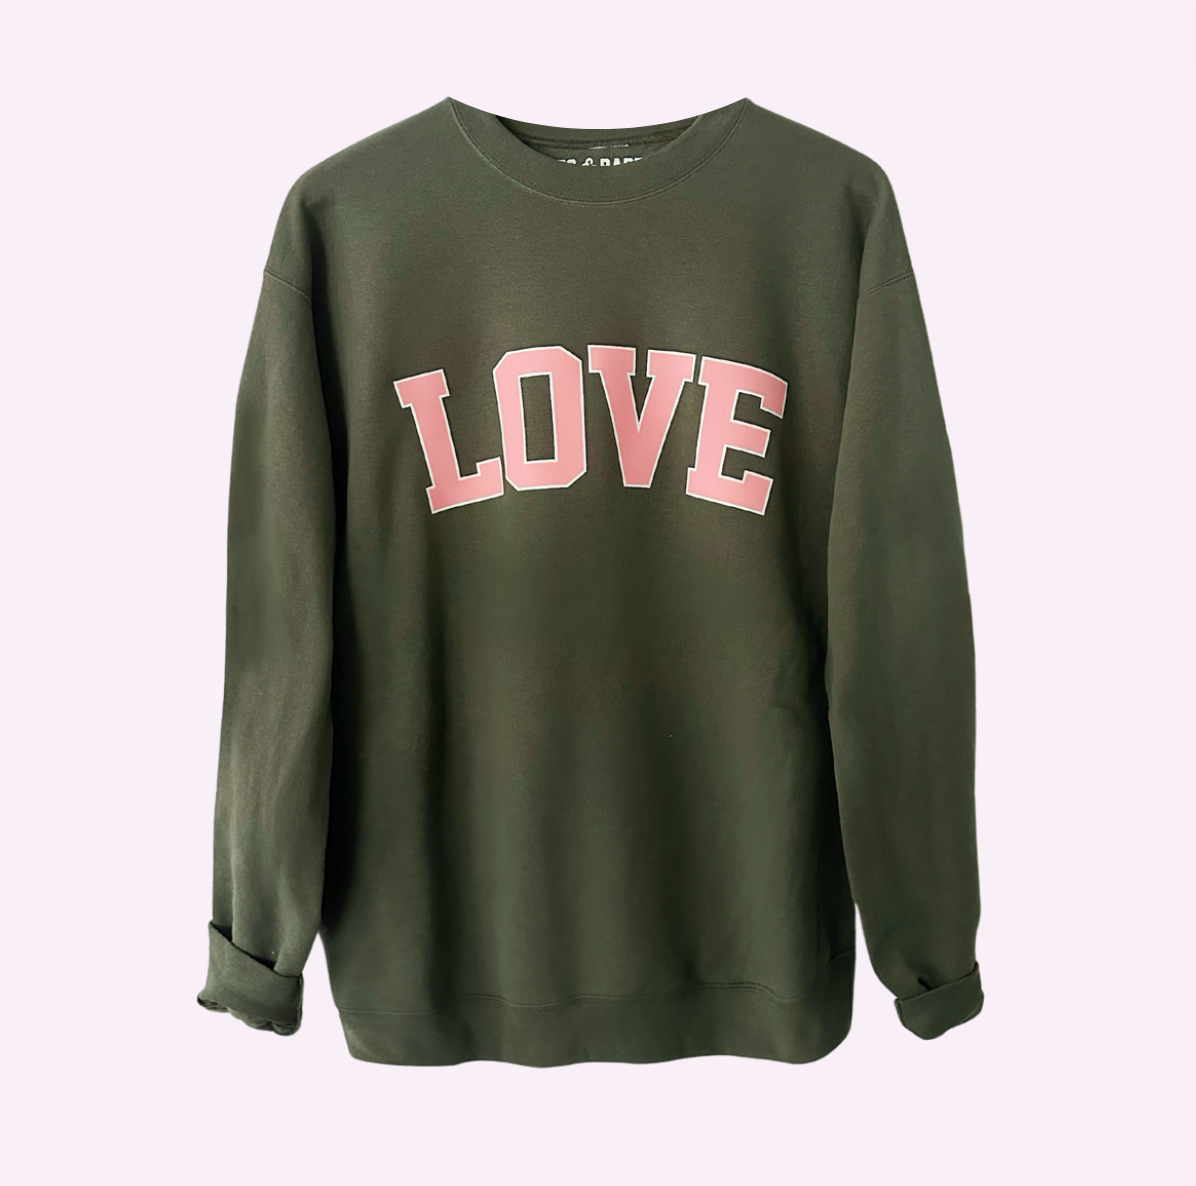 LOVE ♡ sweatshirt